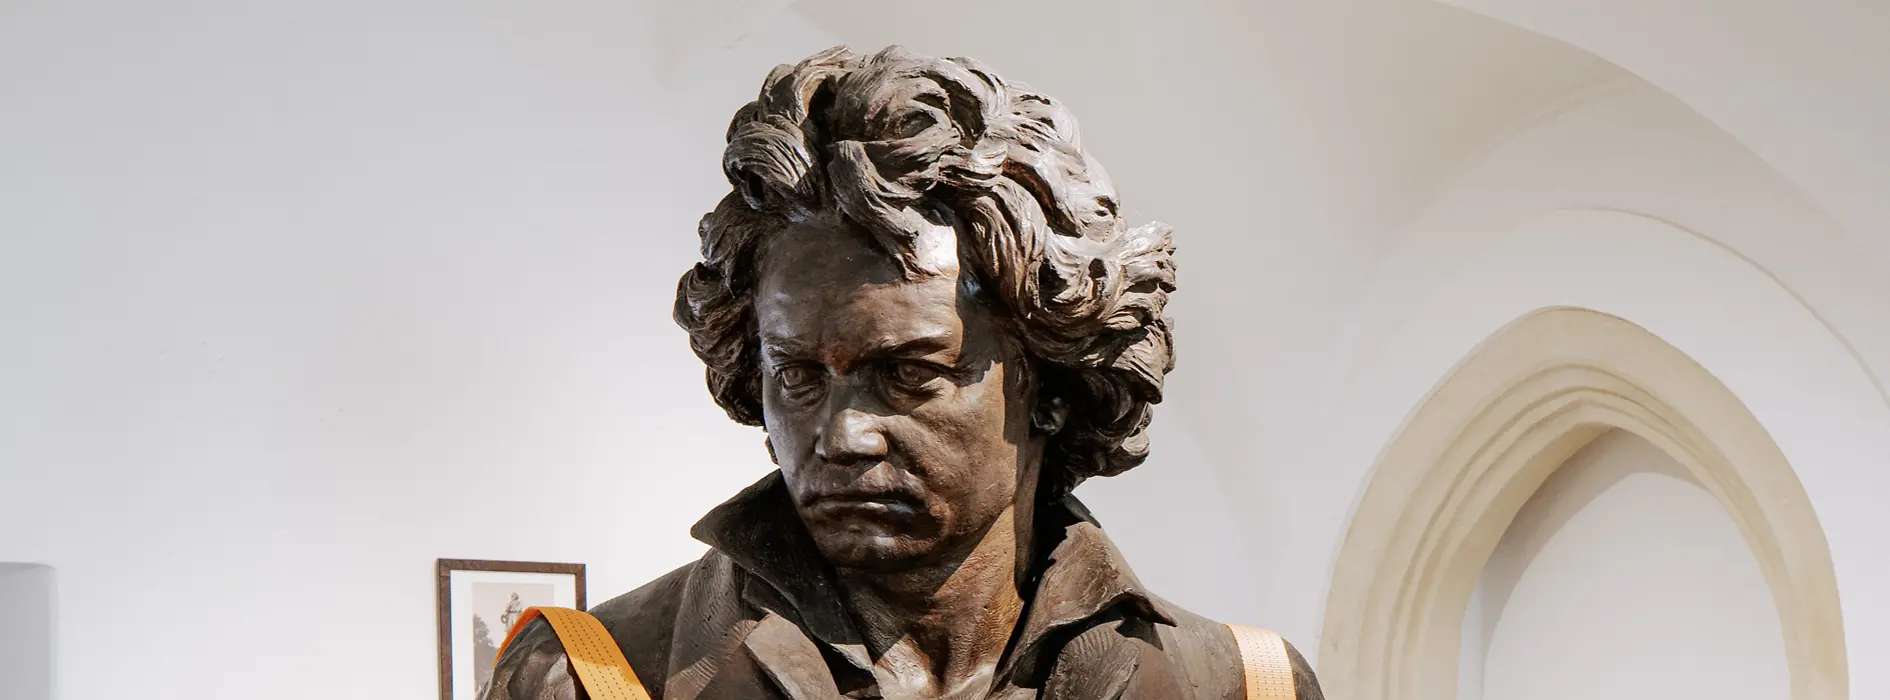 Museo di Beethoven, vista dall’interno, busti di Beethoven su pallet